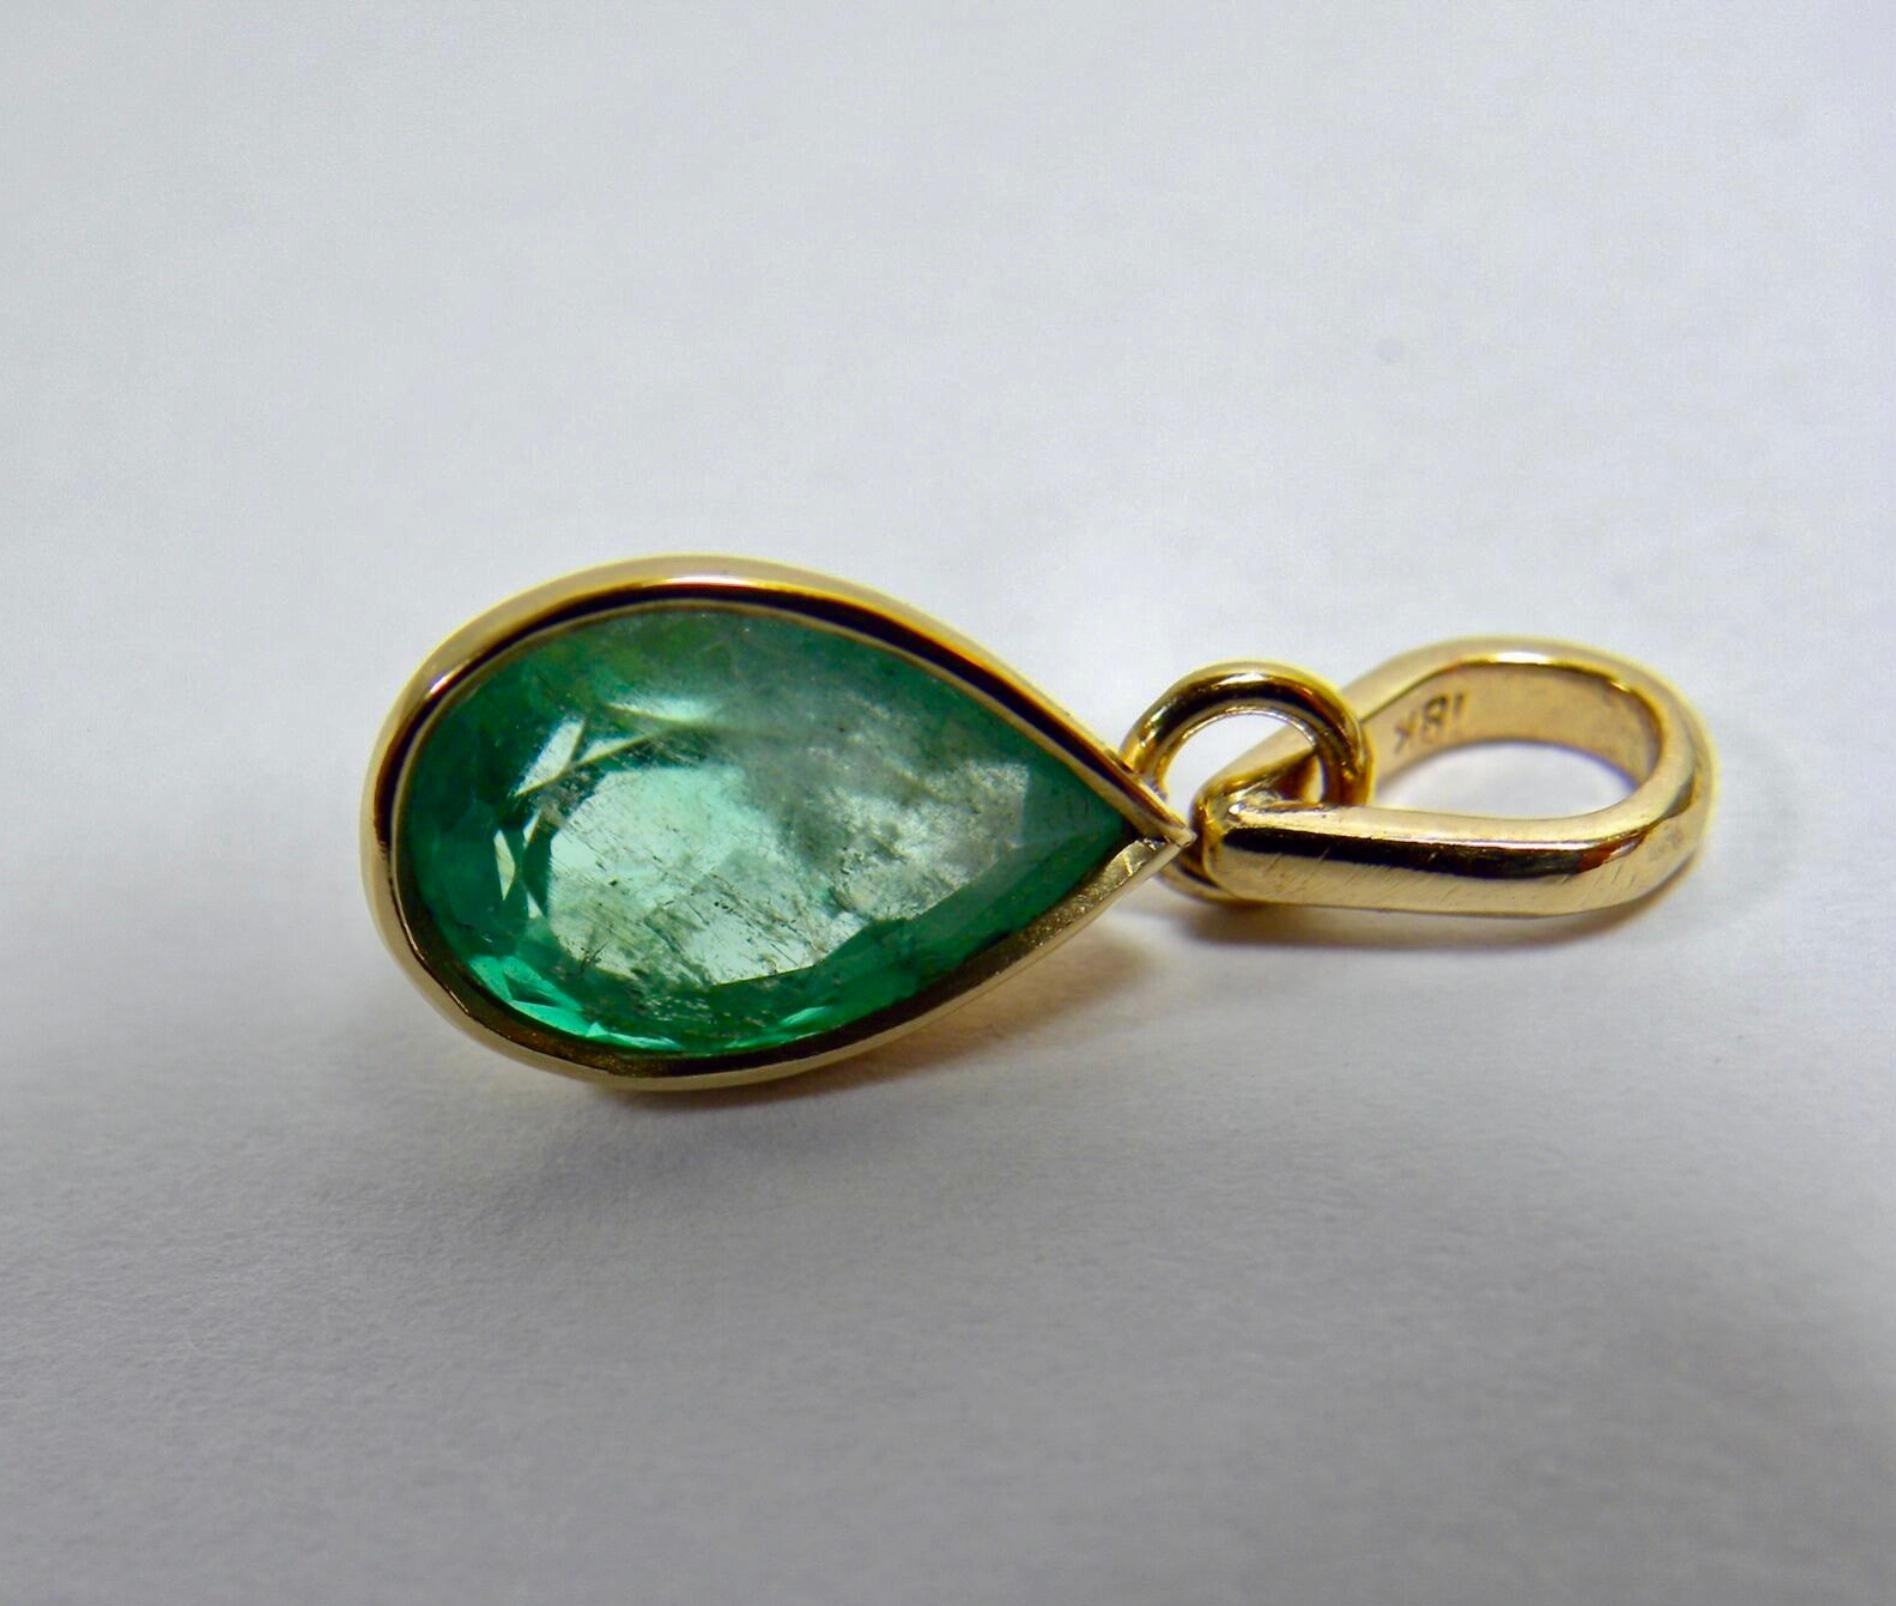 emerald drop necklace